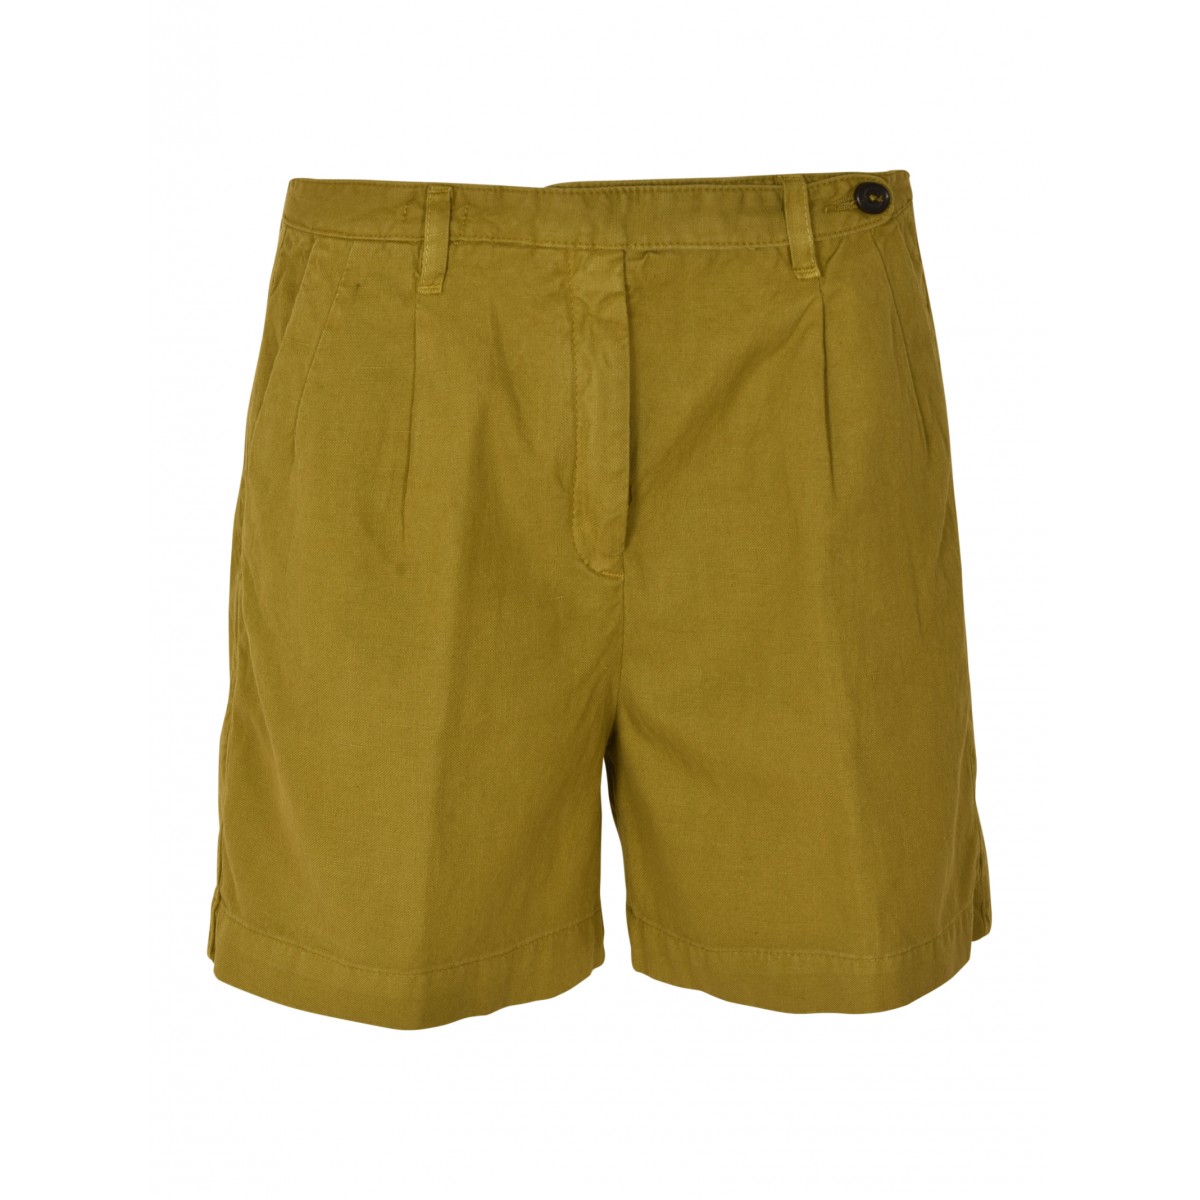 guacamole shorts